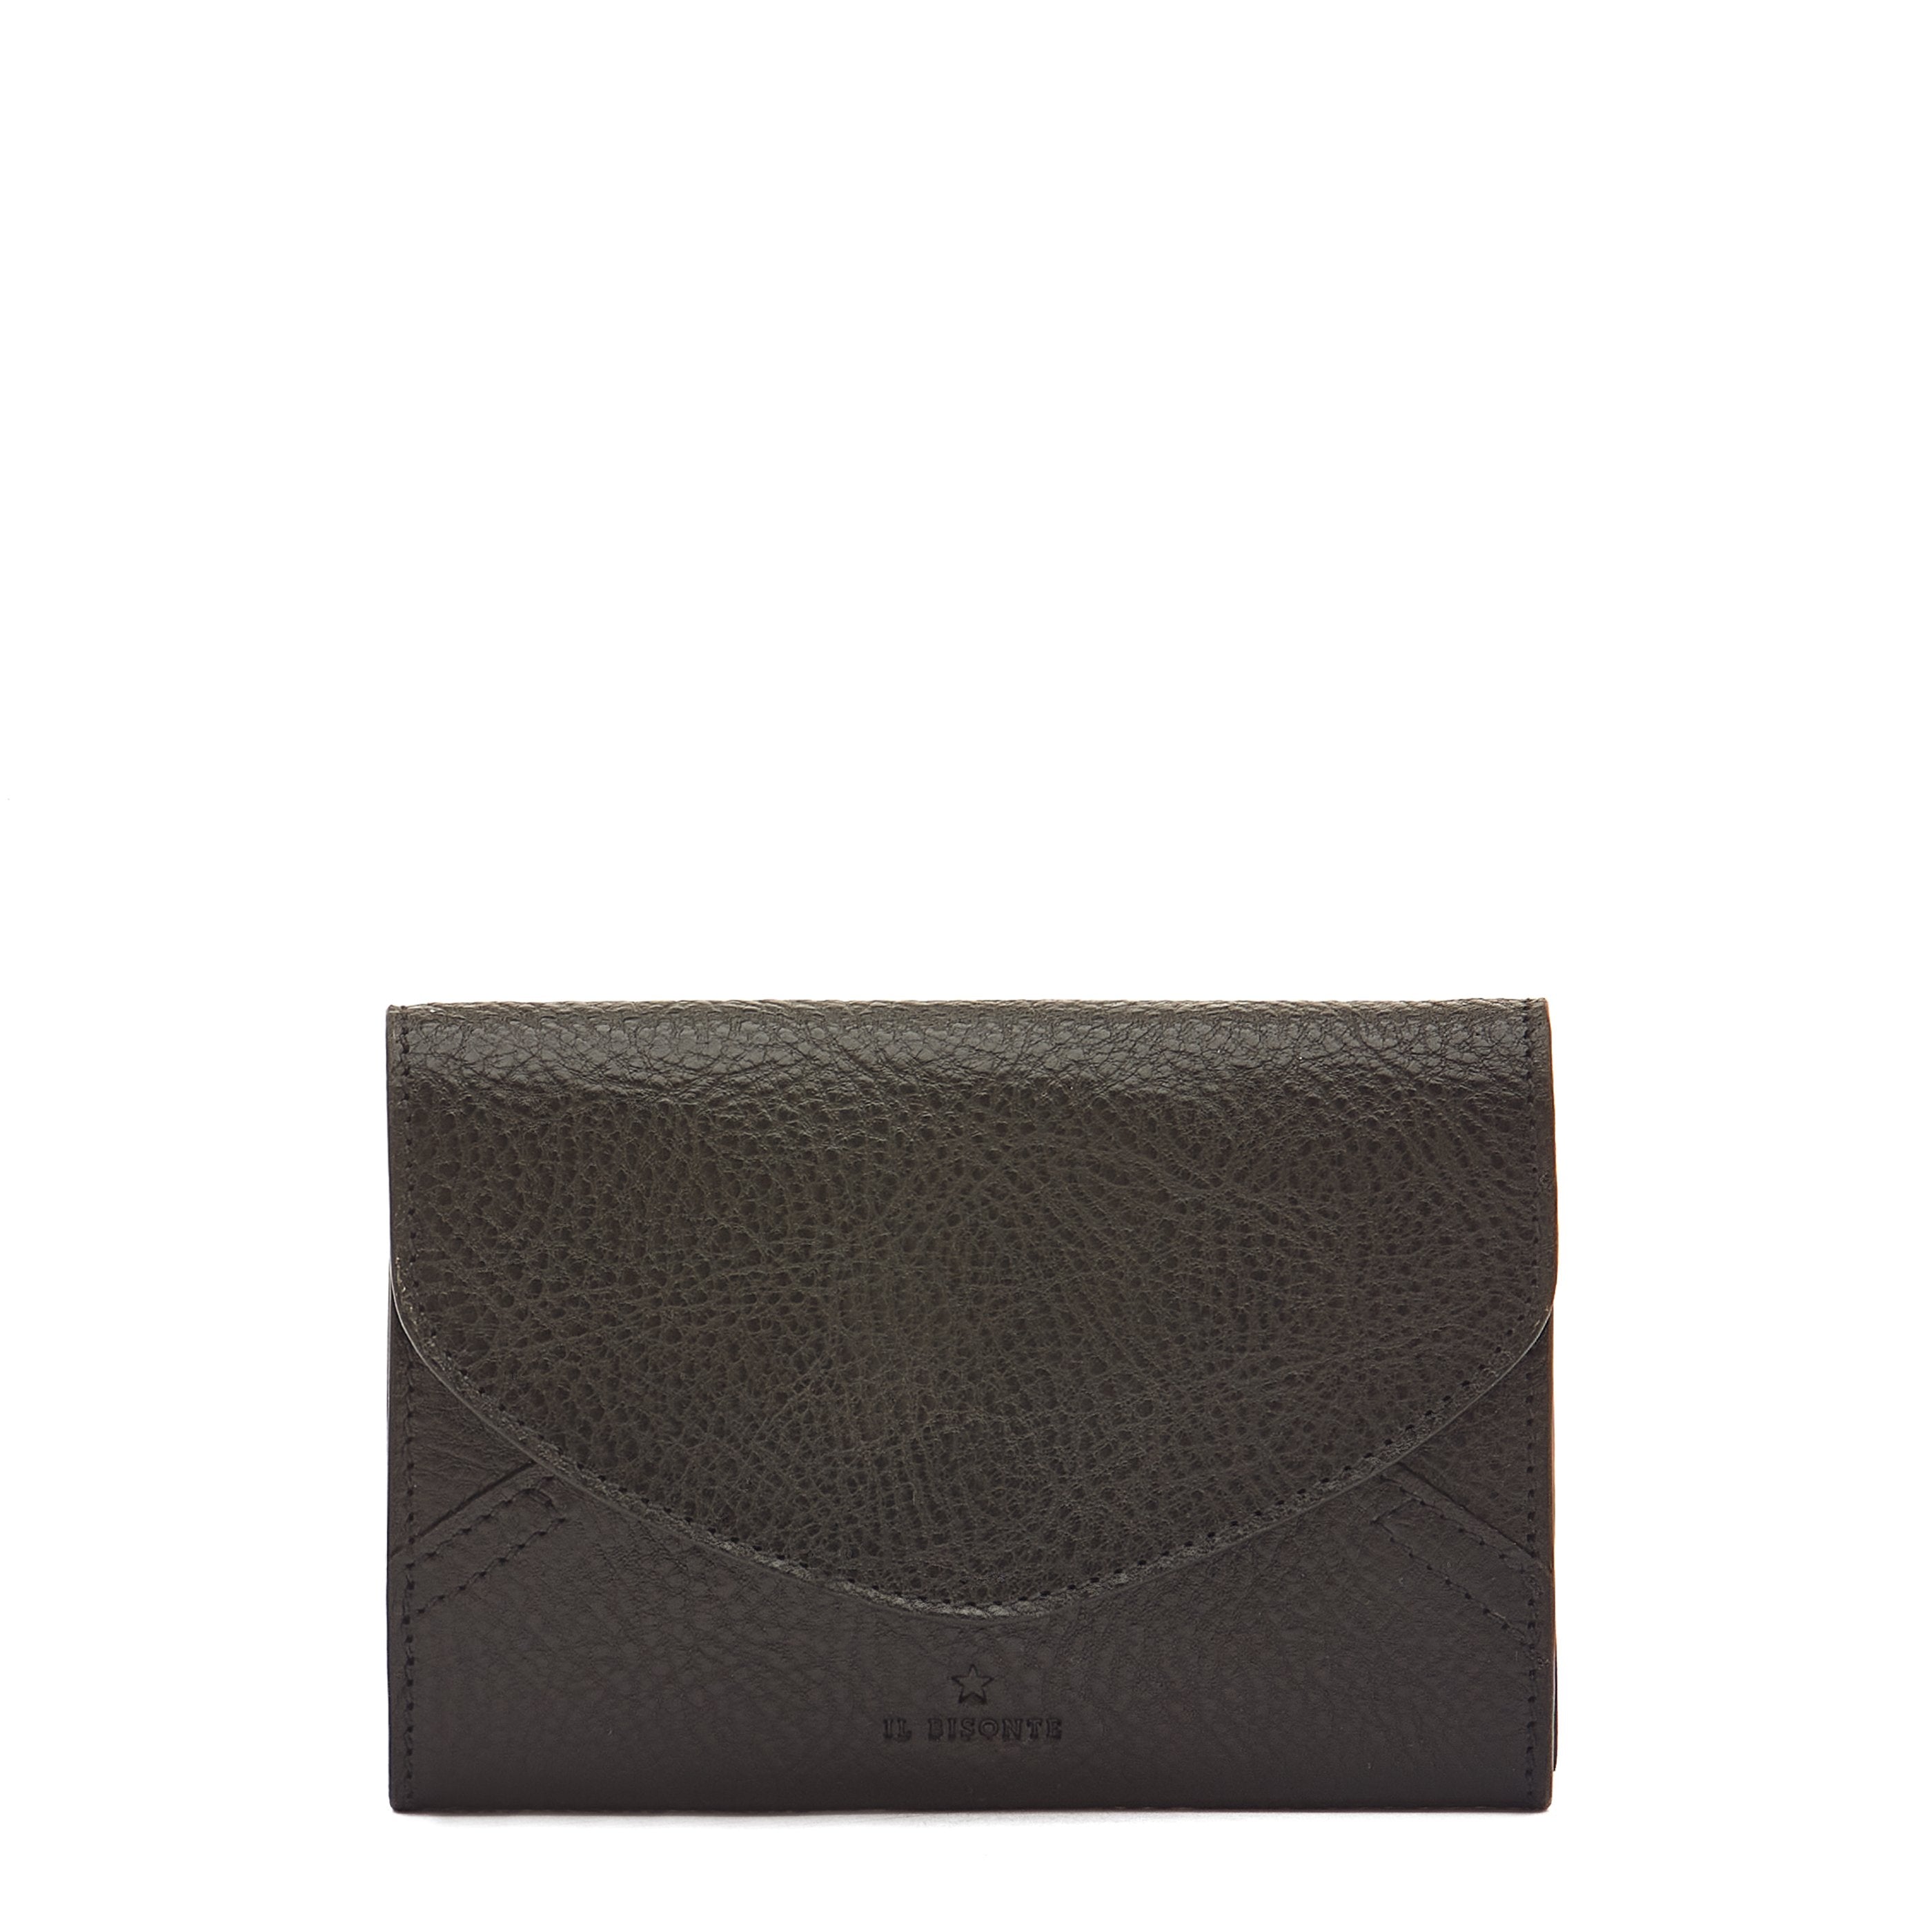 Esperia | Women's wallet in leather color black